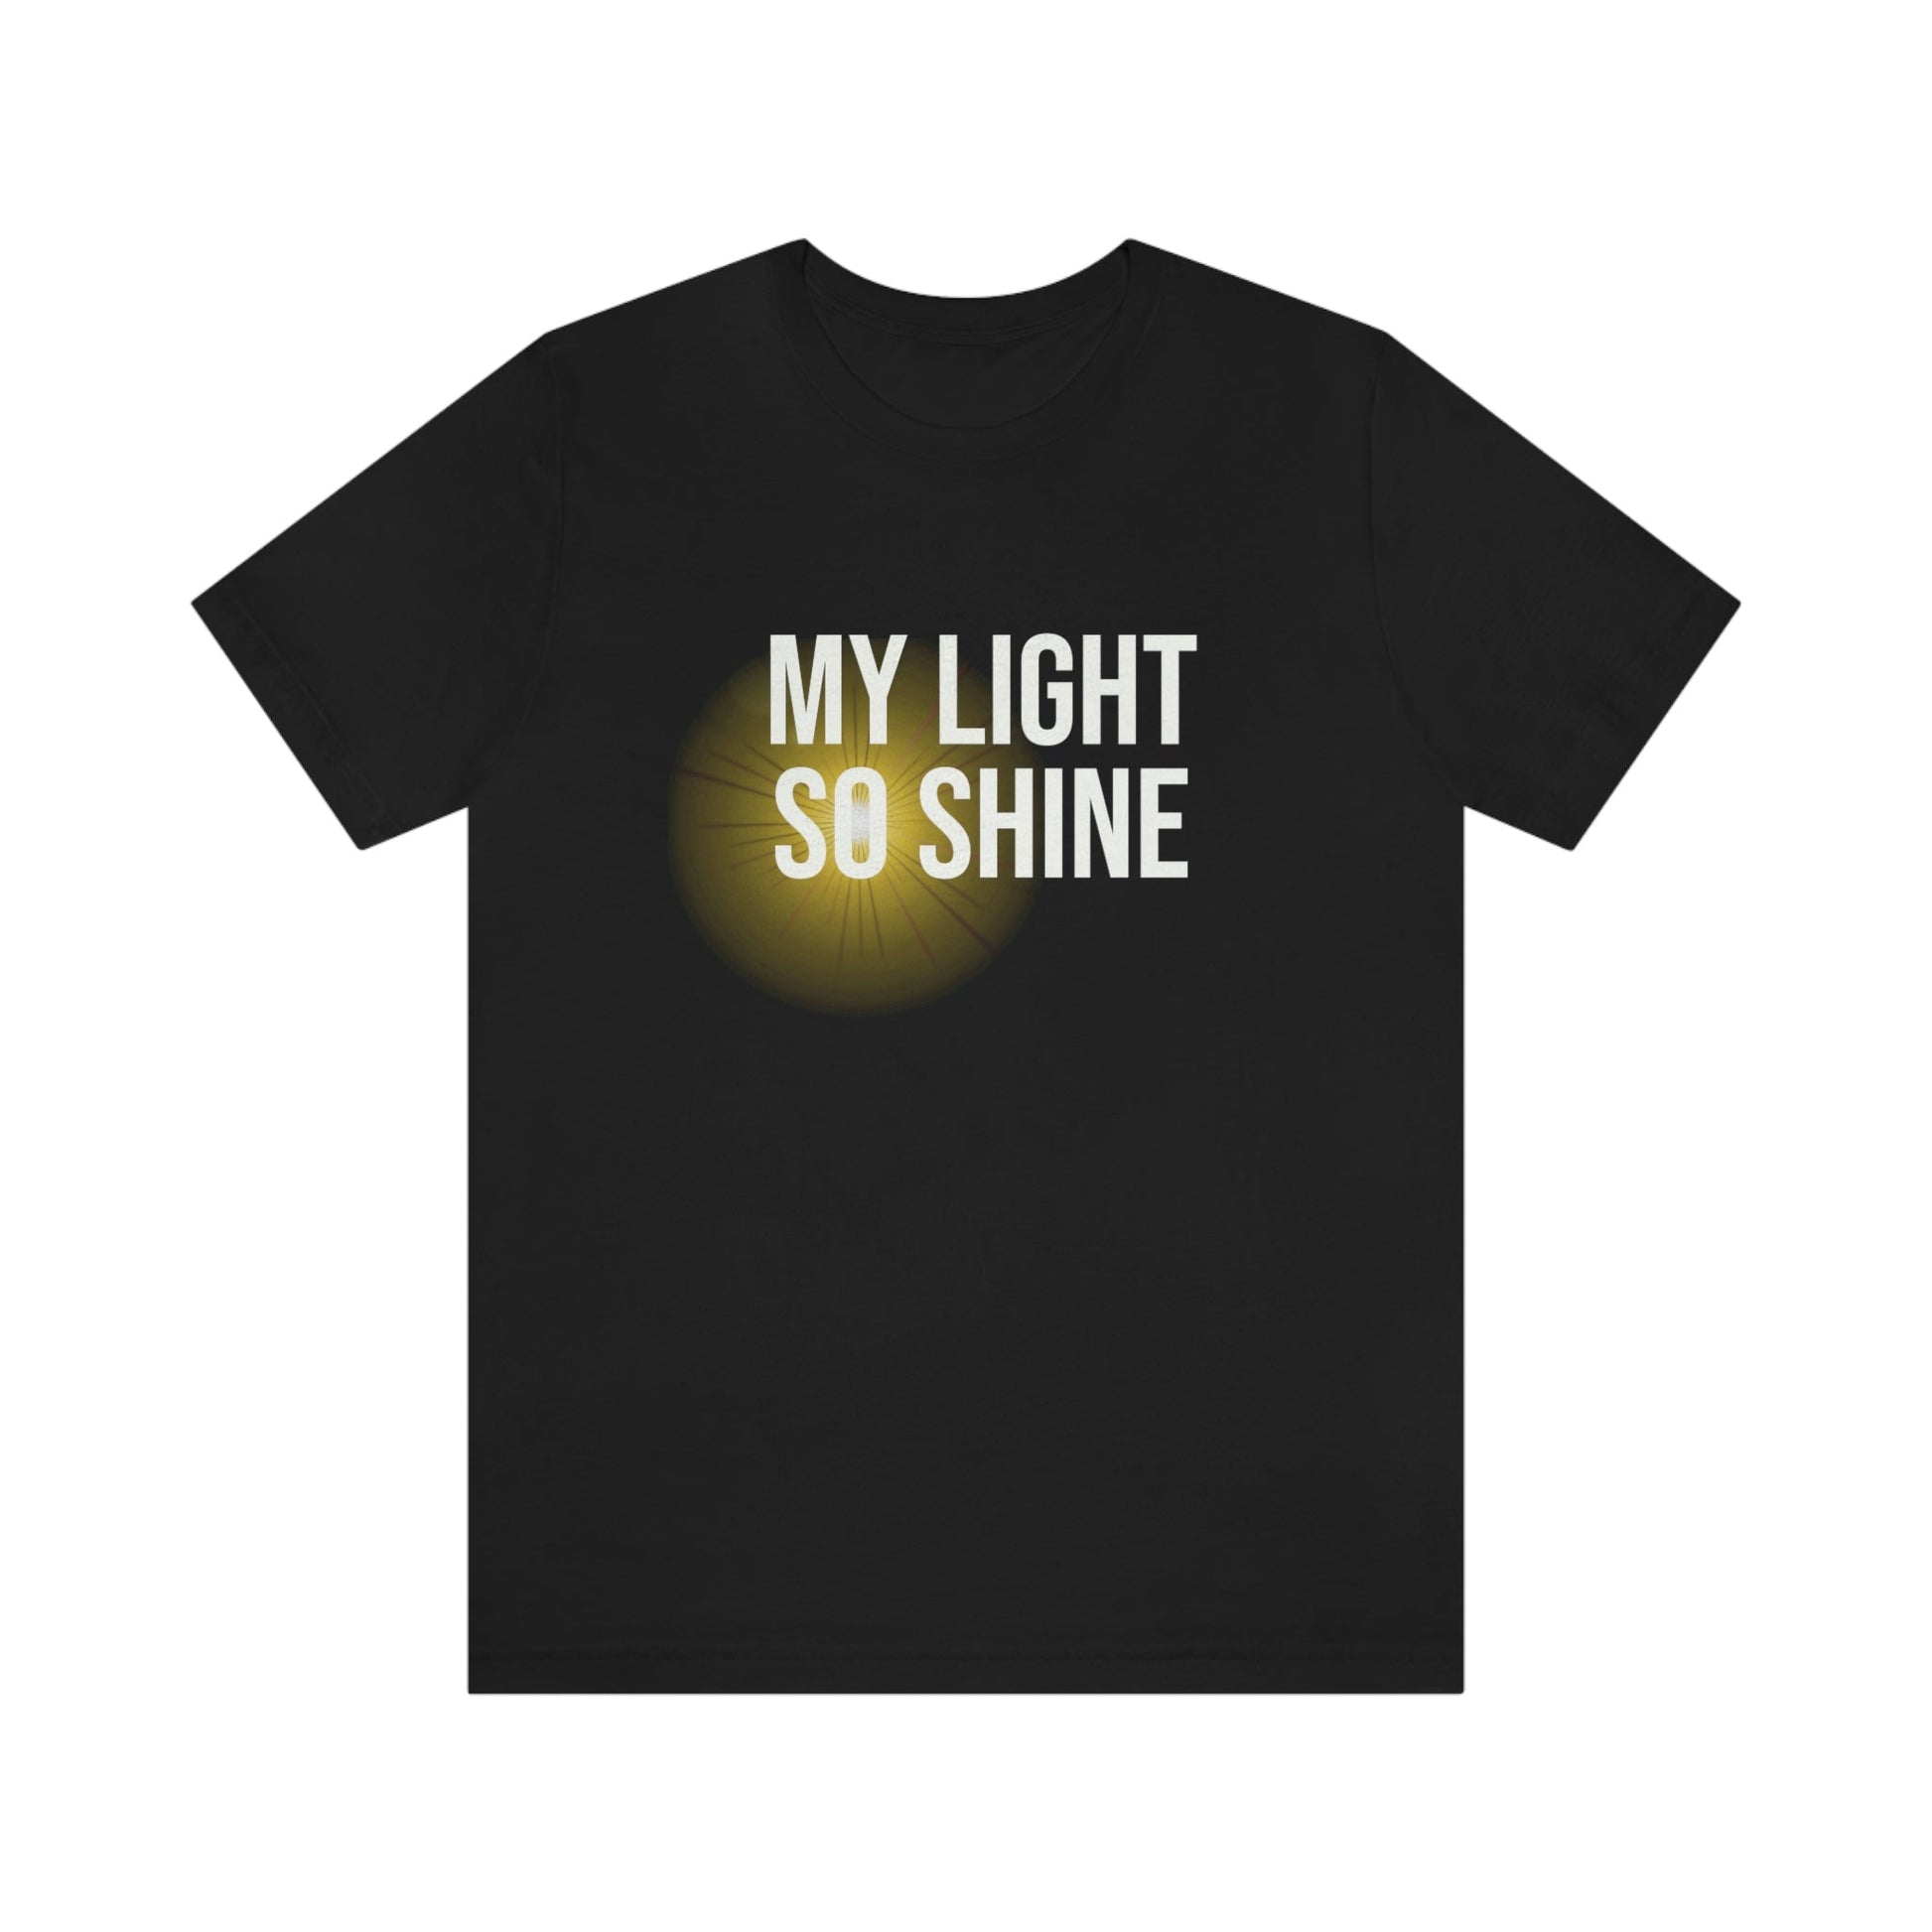 My Light So Shine Graphic T-shirt-T-Shirt-Black-S-mysticalcherry